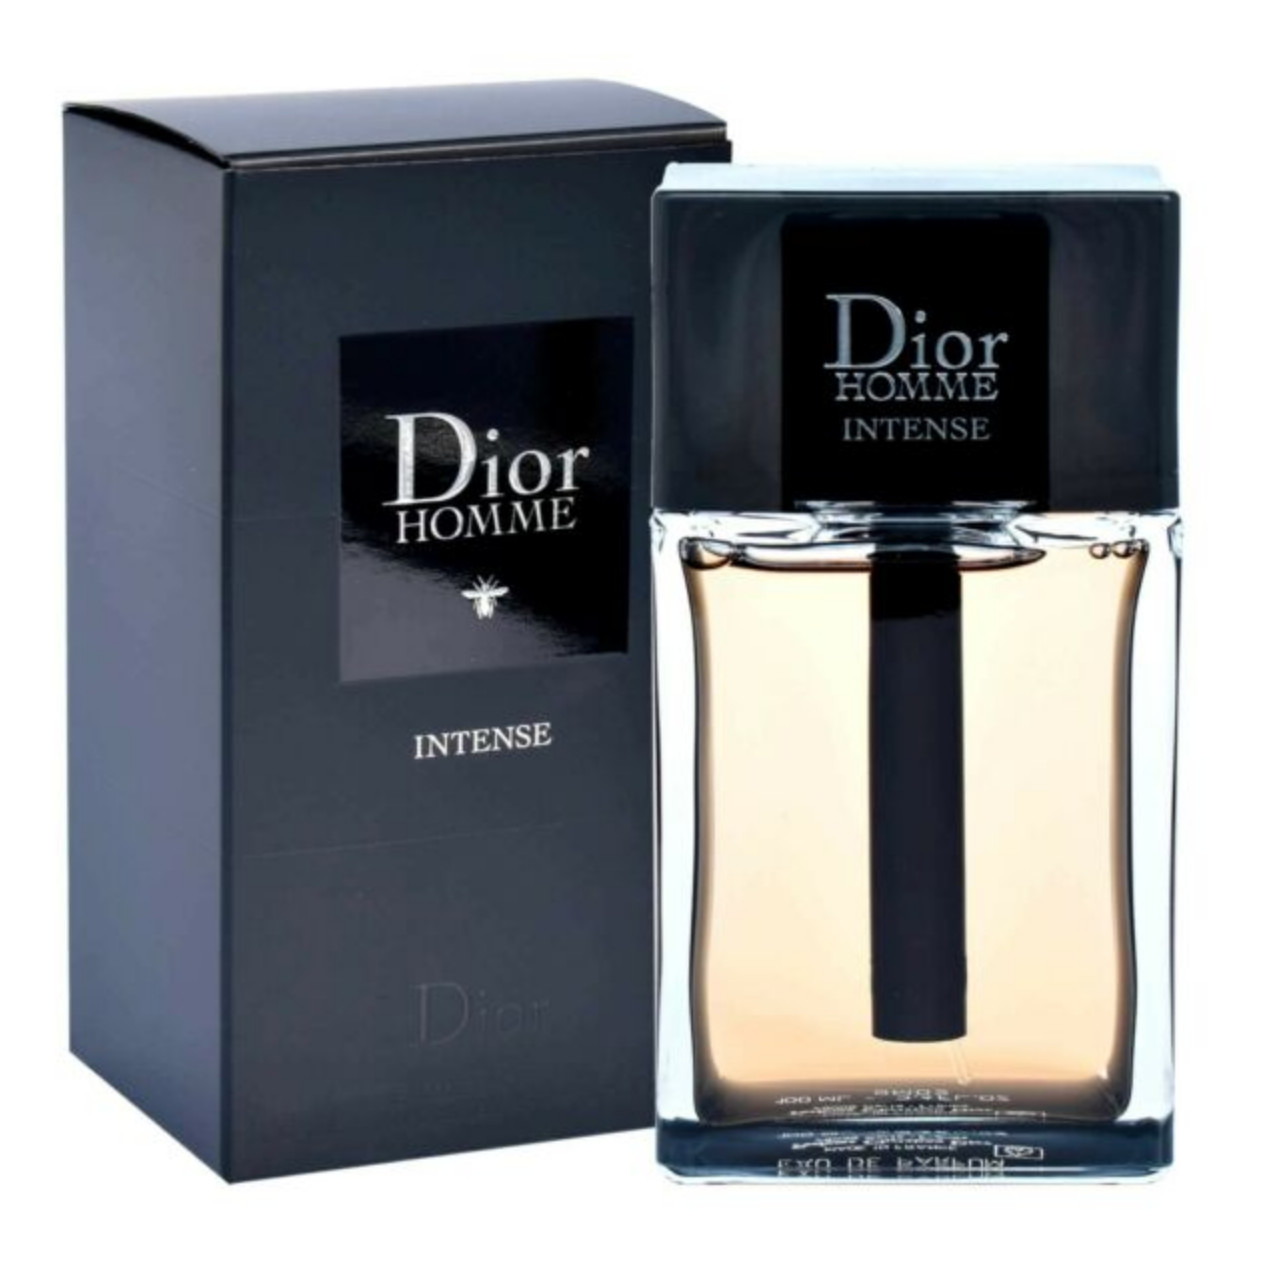 Homme Christian Dior Eau Parfum Spray 150ML